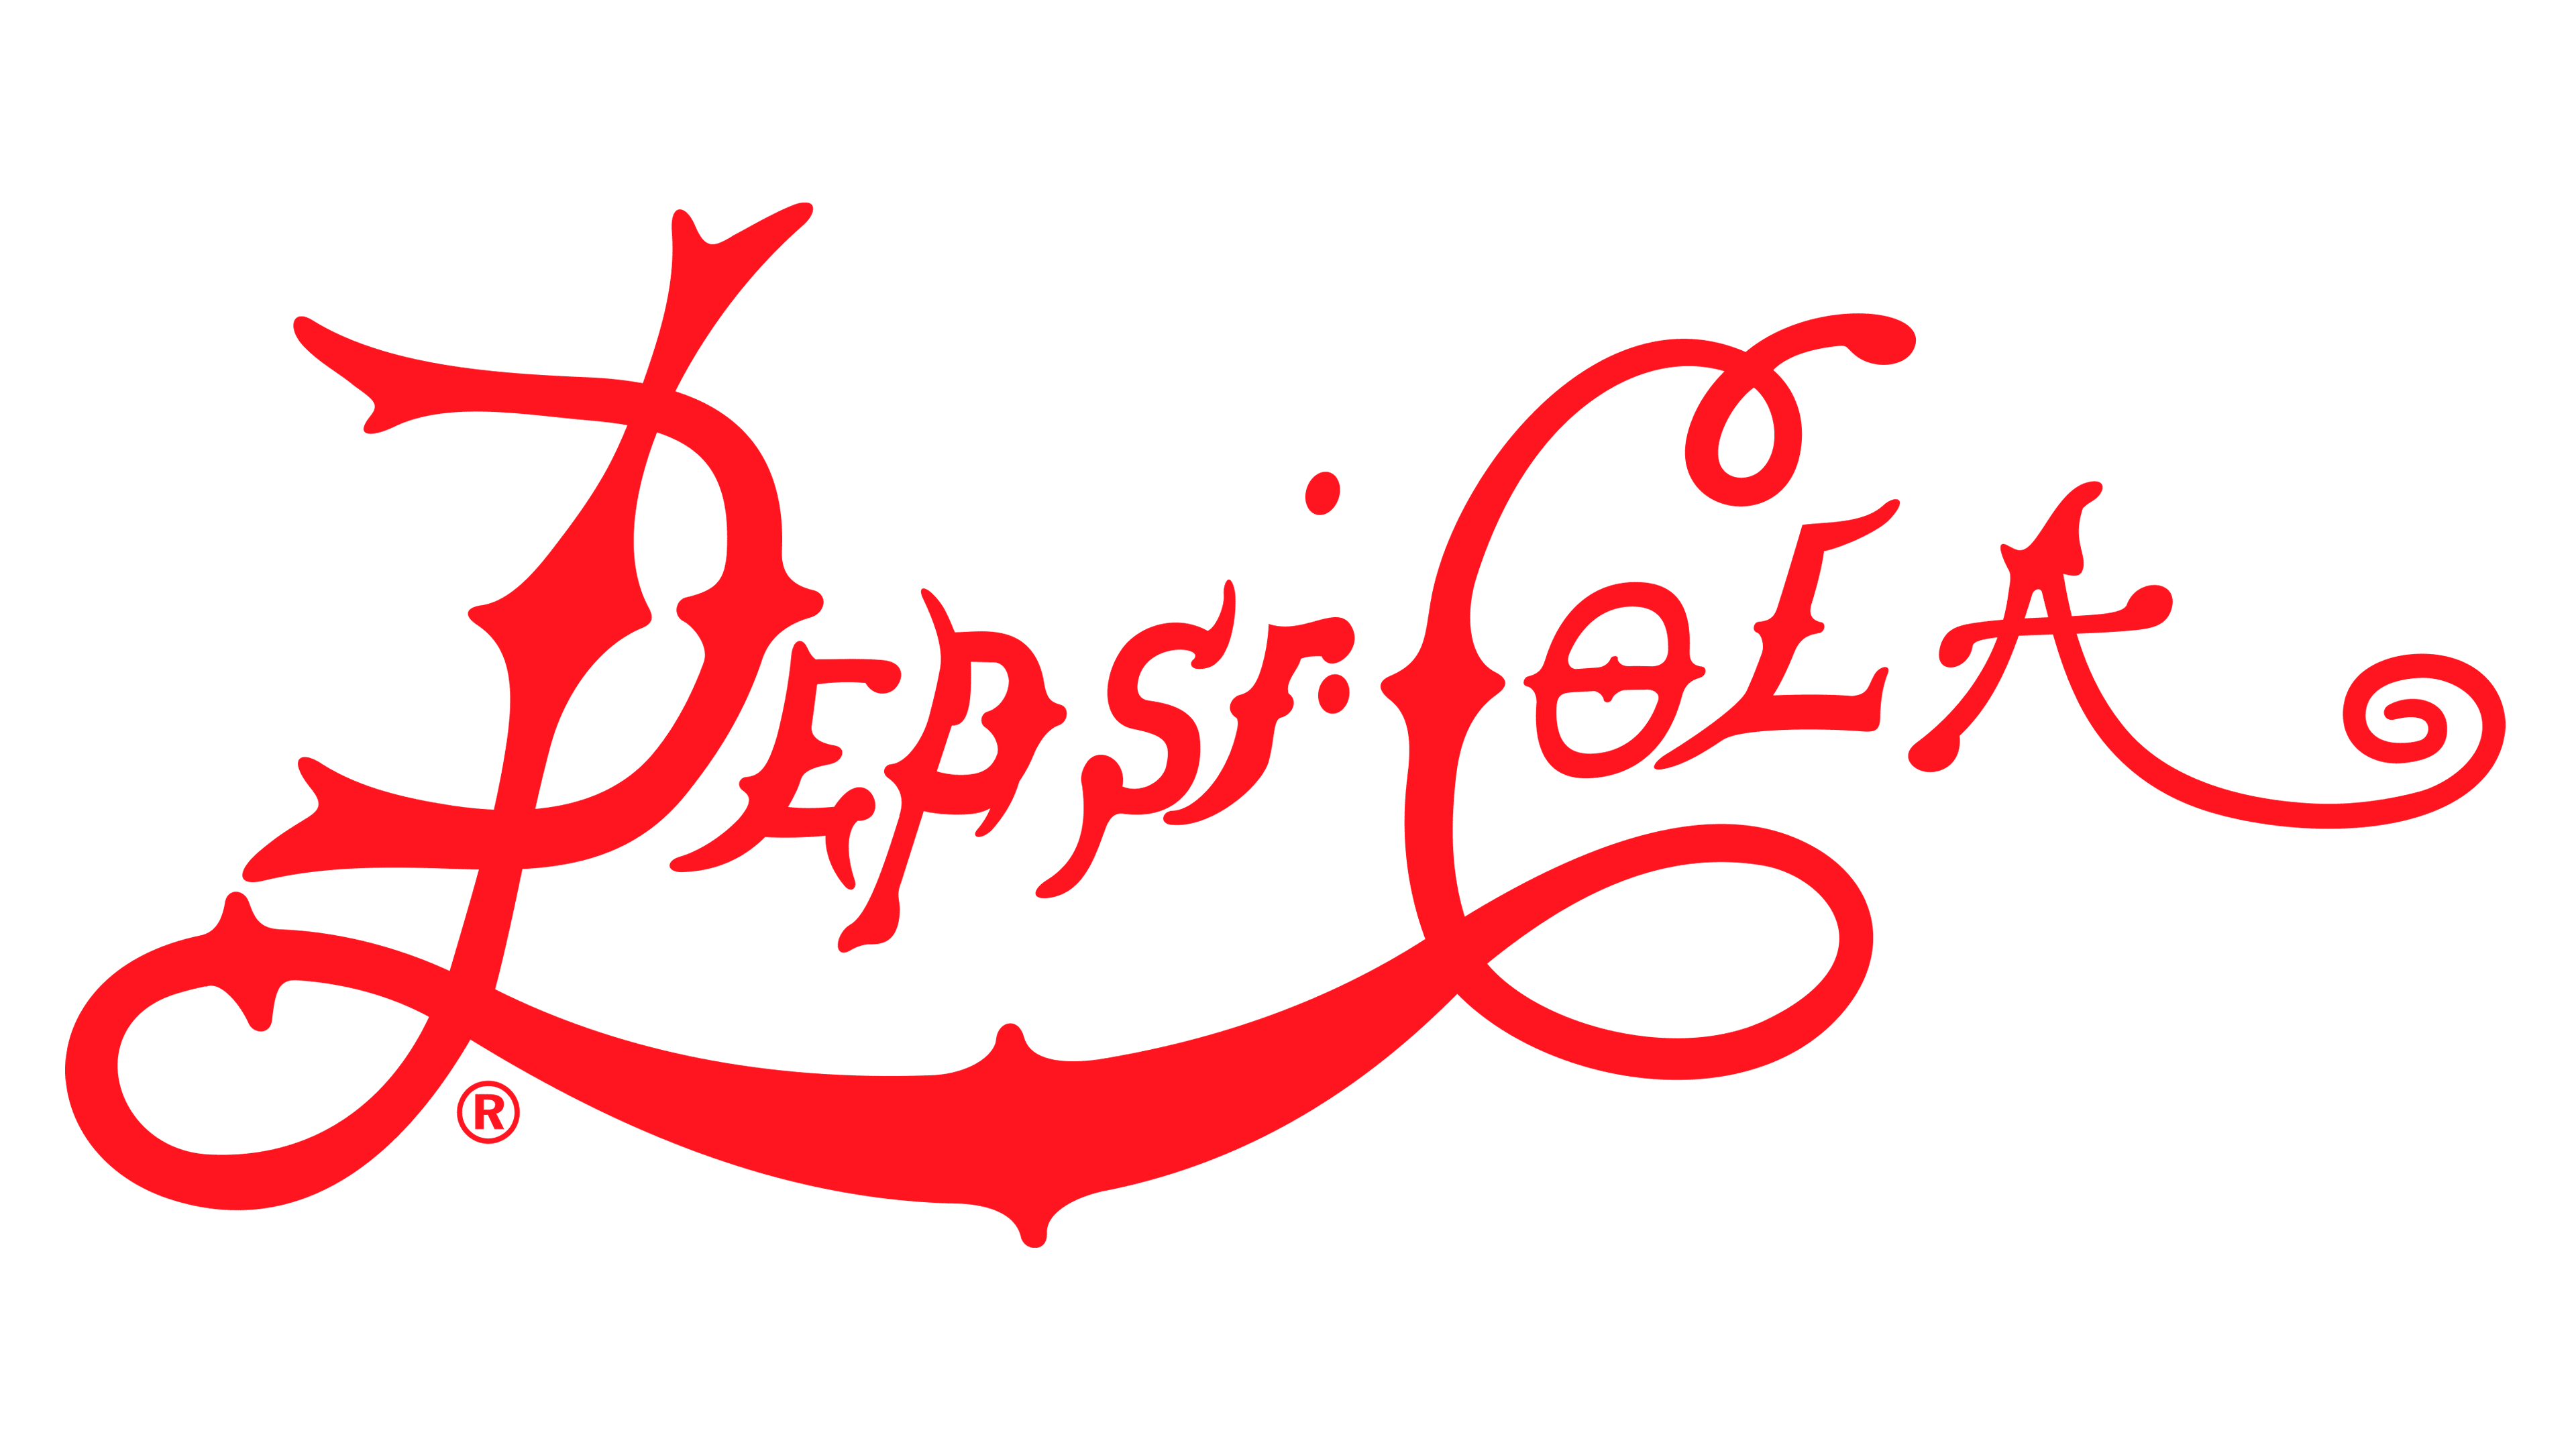 Pepsi Logo 1973